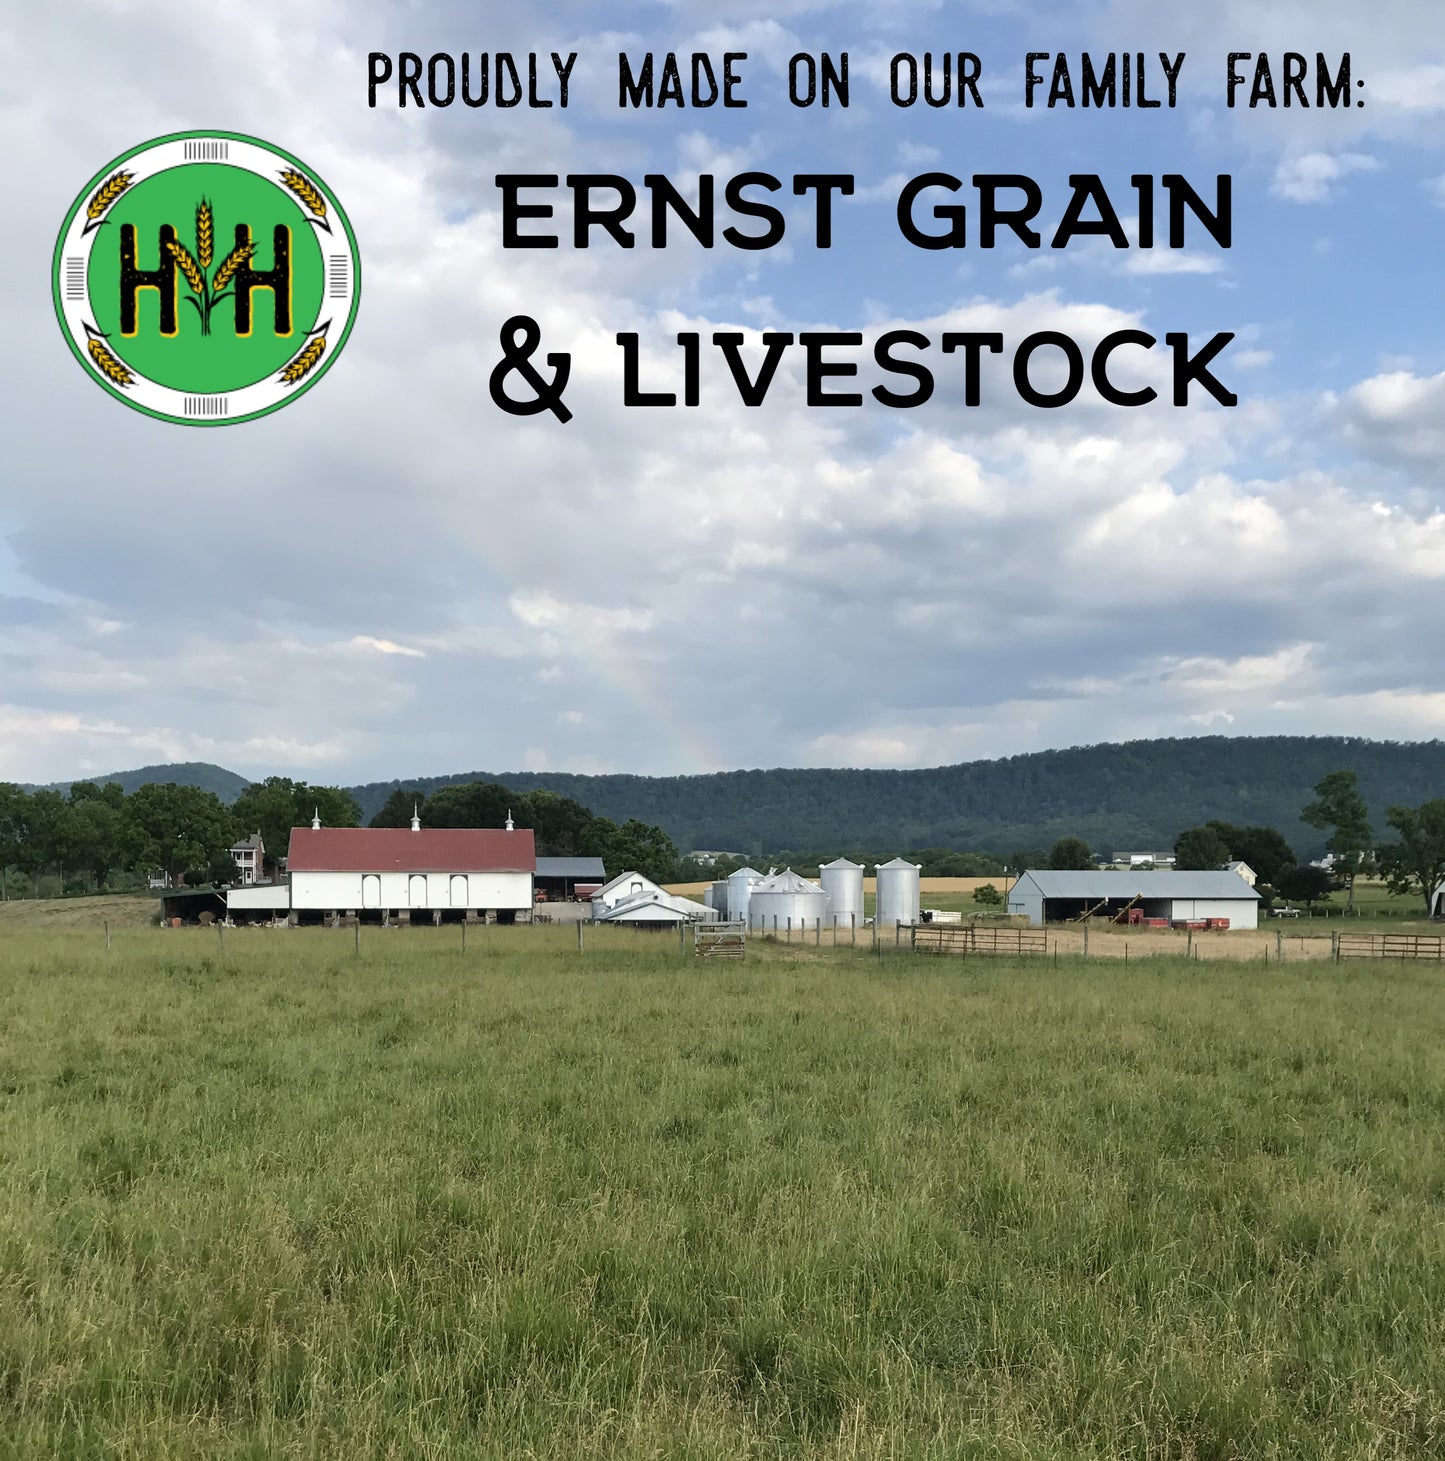 Homestead Harvest Non-GMO Turkey & Game Bird Starter 28% for Growing Turkeys, Quail, Peacocks, Guineas, Pigeons, and Pheasants